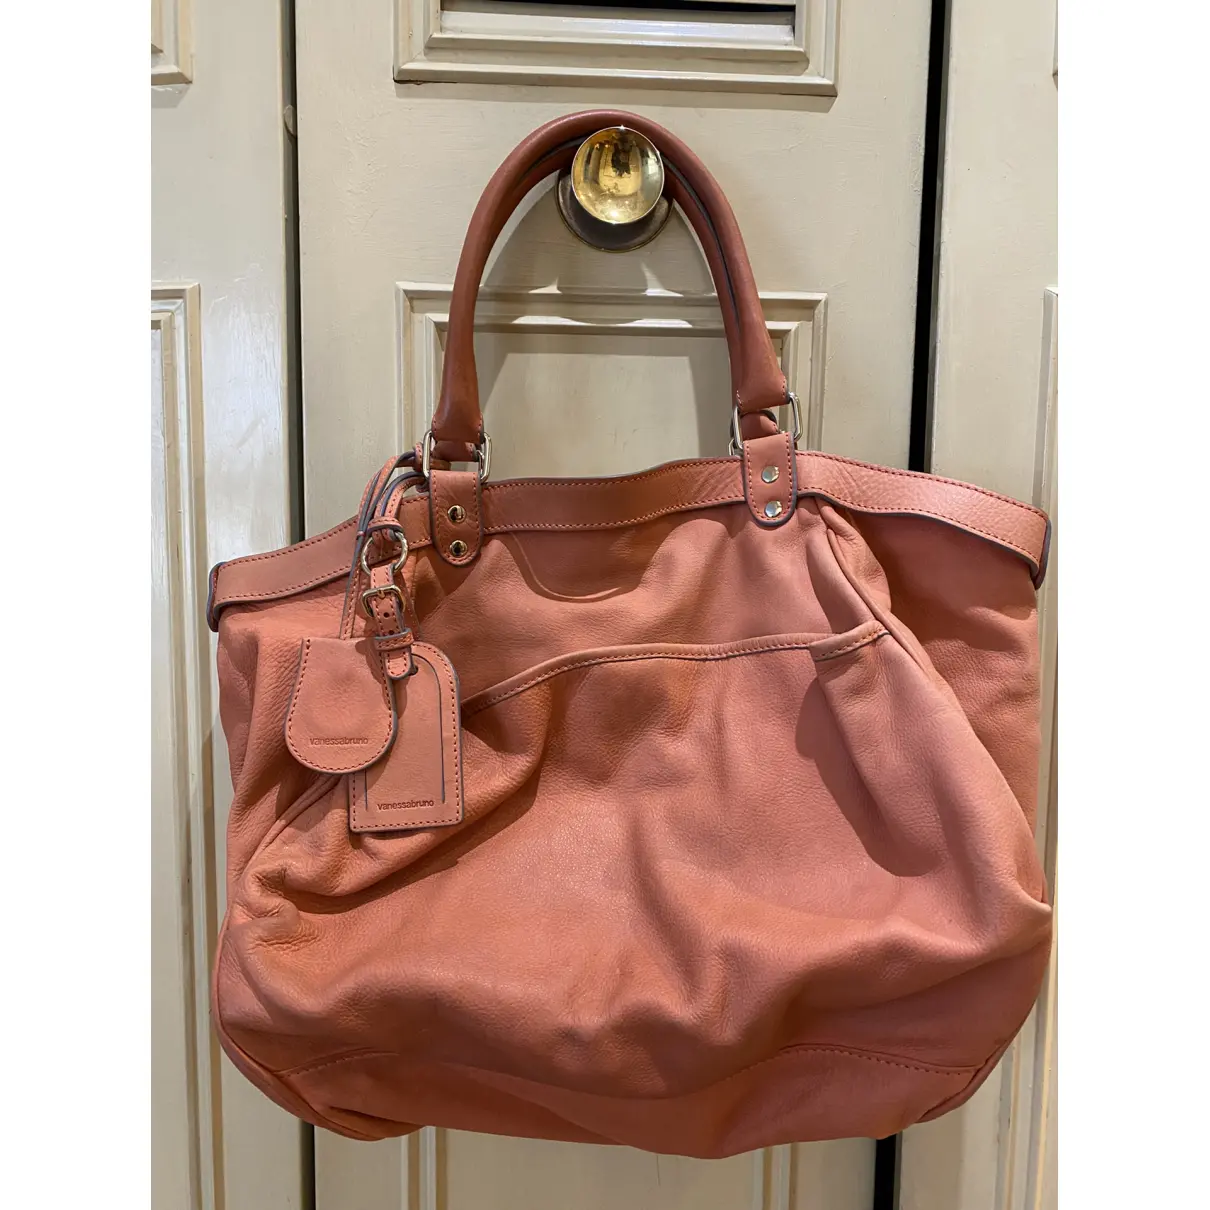 Buy Vanessa Bruno Lune leather handbag online